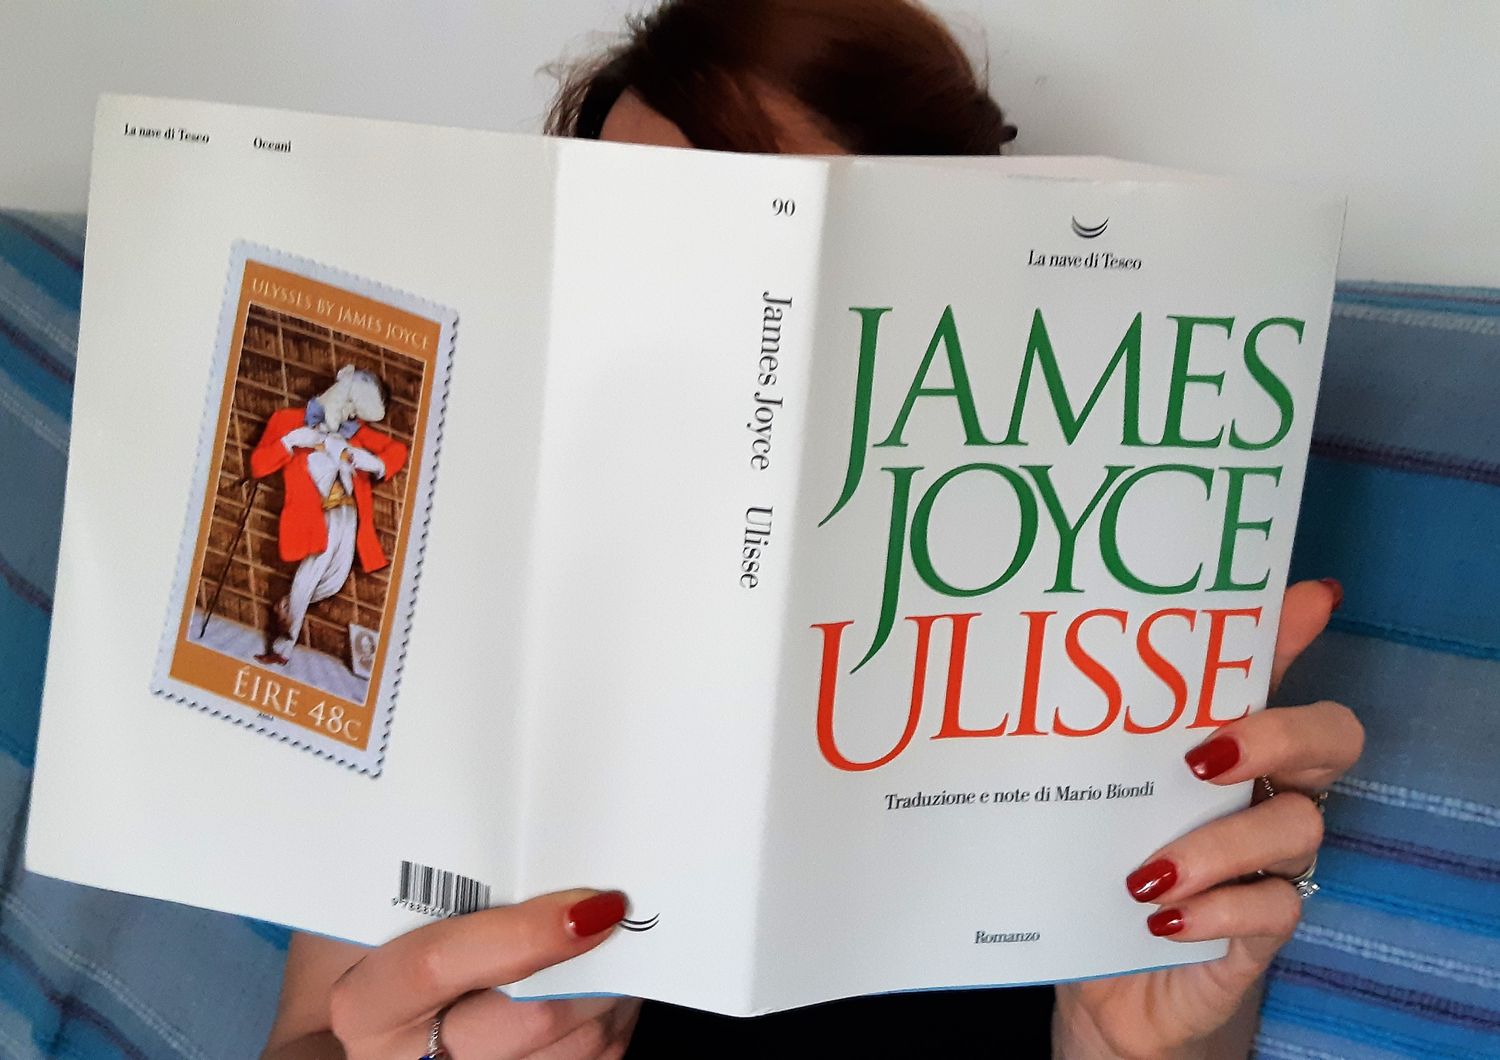 'Ulisse' di James Joyce traduzione di Mario Biondi (La Nave di Teseo - 2020)